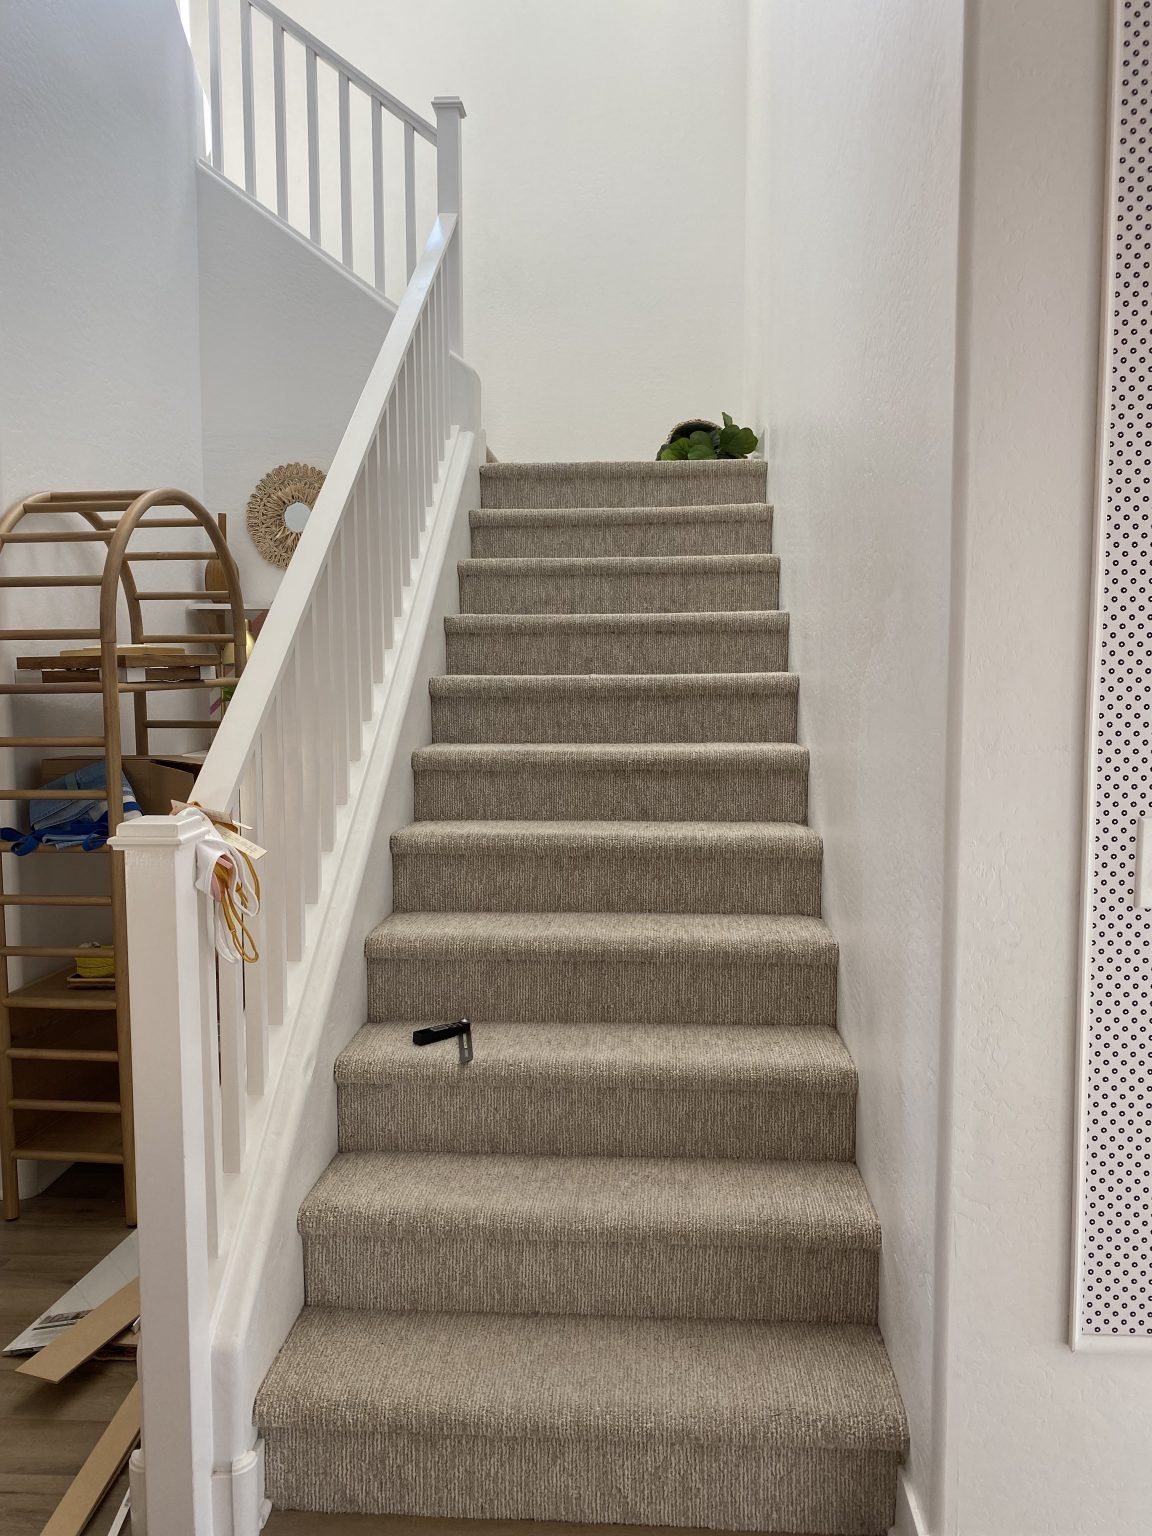 One-Room-Challenge-Stairs-Before-1152x1536 (1).jpg